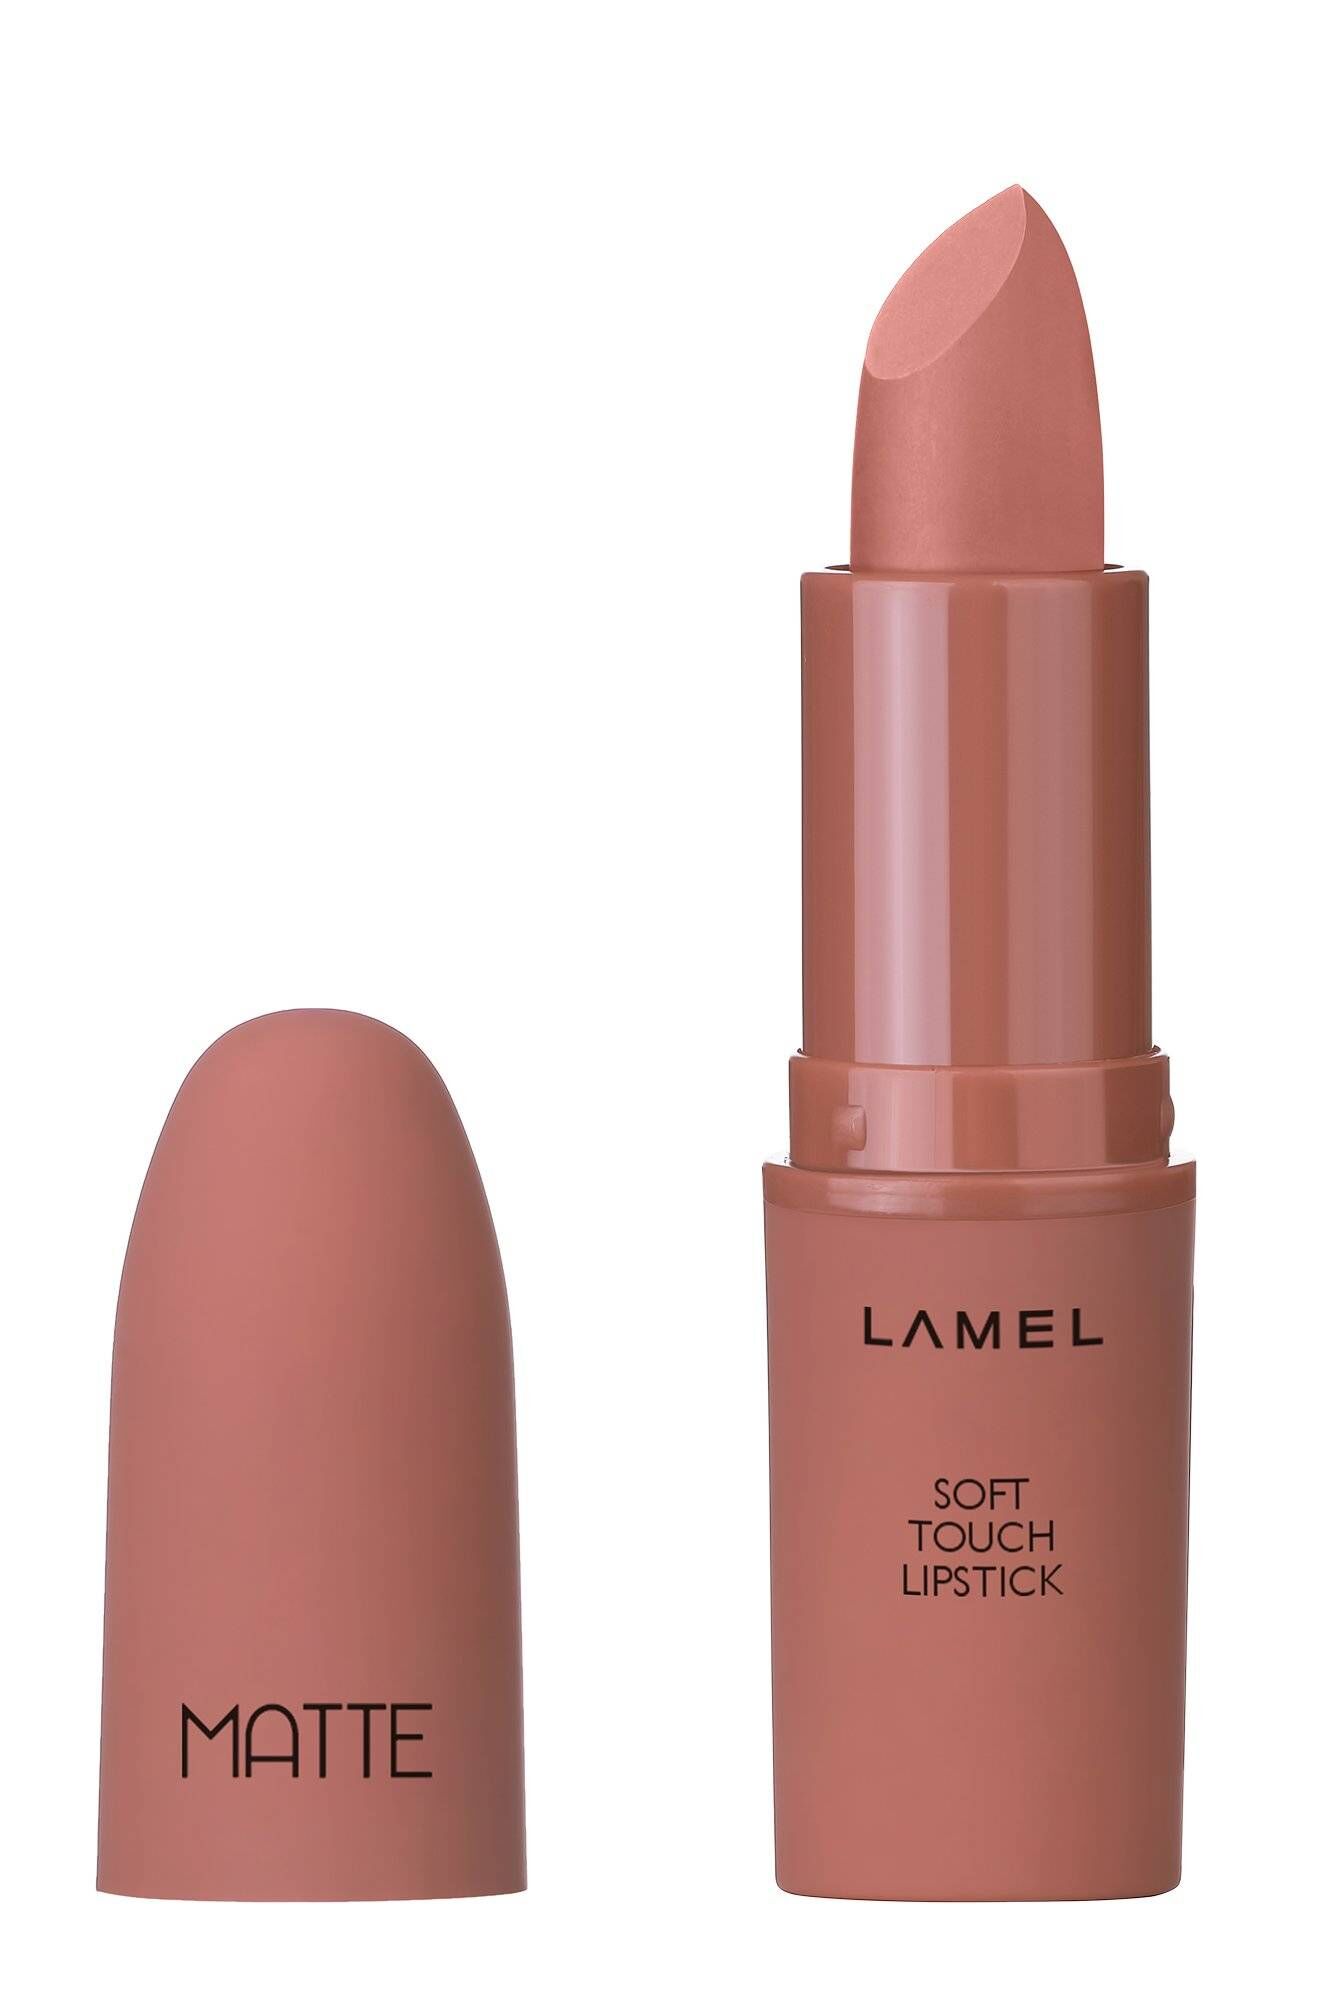 Помада матовая для губ LAMEL Matte Soft Touch Lipstick т.401 true nude 3,8 г